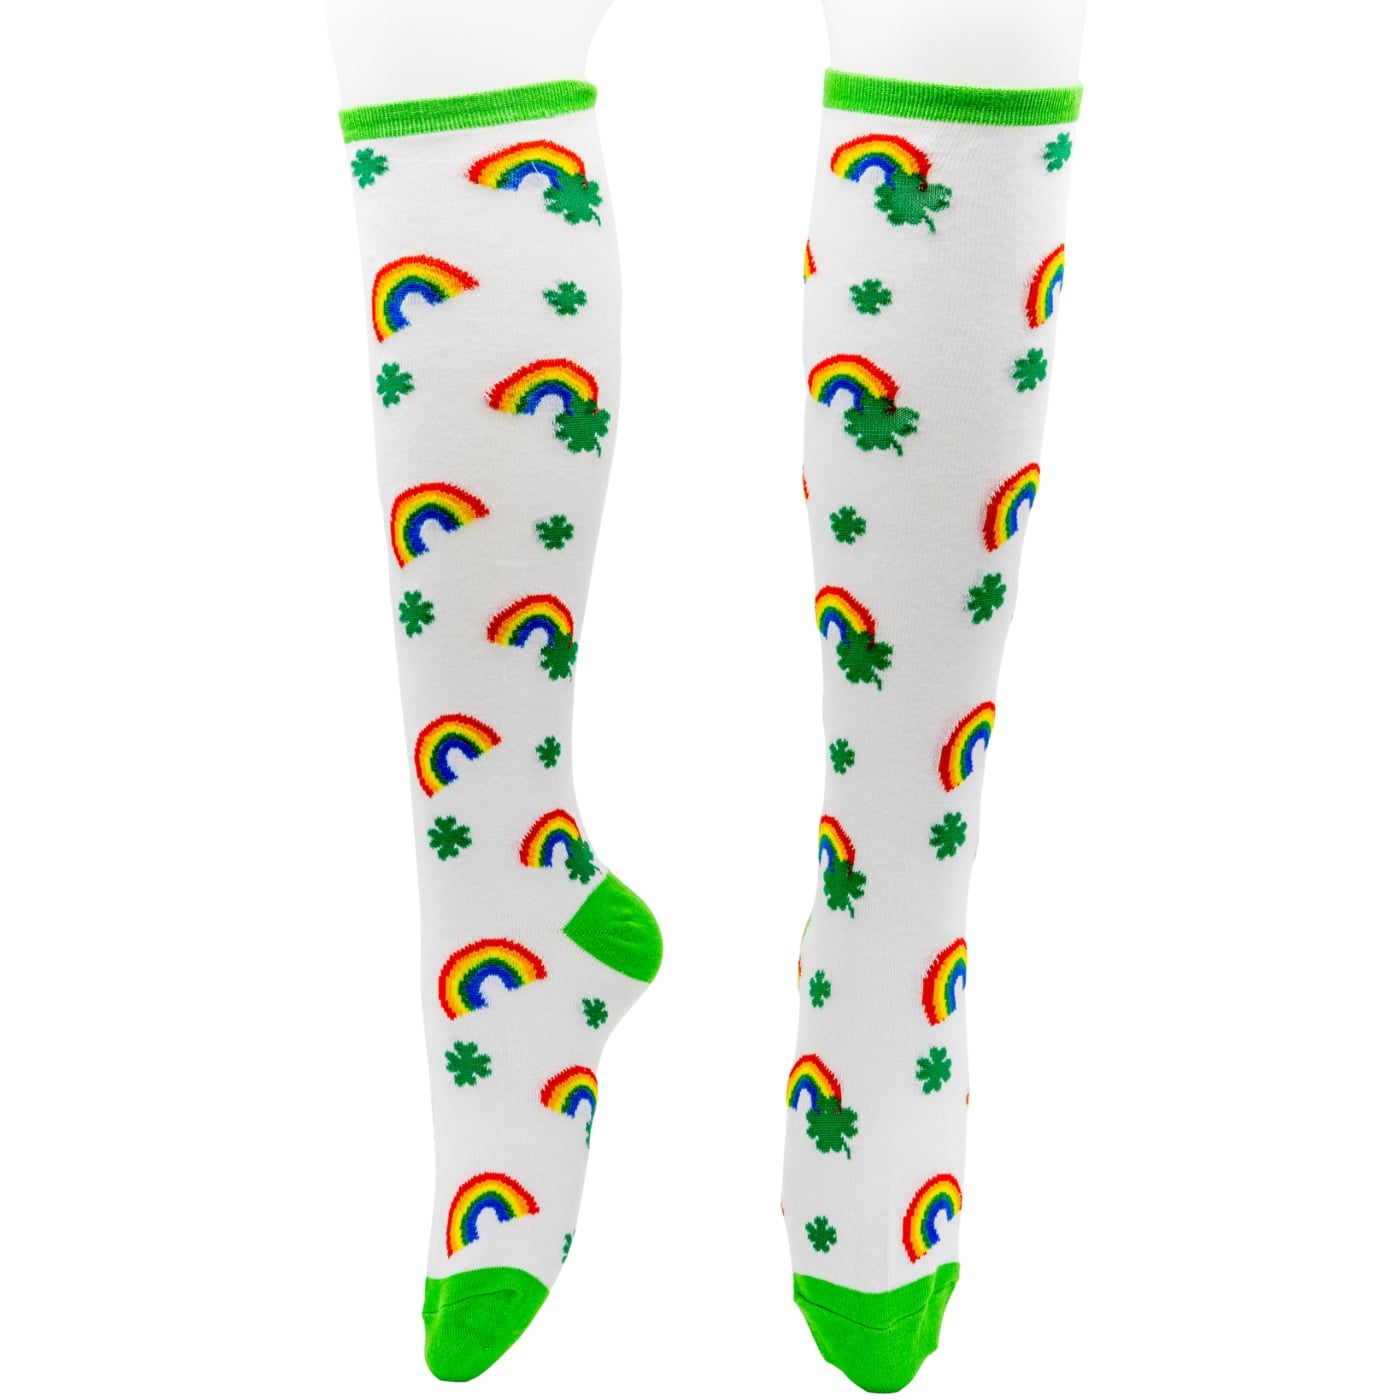 Shamrock Rainbow Stripe Knee High Socks by RainbowsAndFairies.com.au (Stripe Long Socks - Rainbow - Stockings - Colourful Socks - Vintage Inspired) - SKU: FW_SOCKS_RAINB_SHA - Pic-01